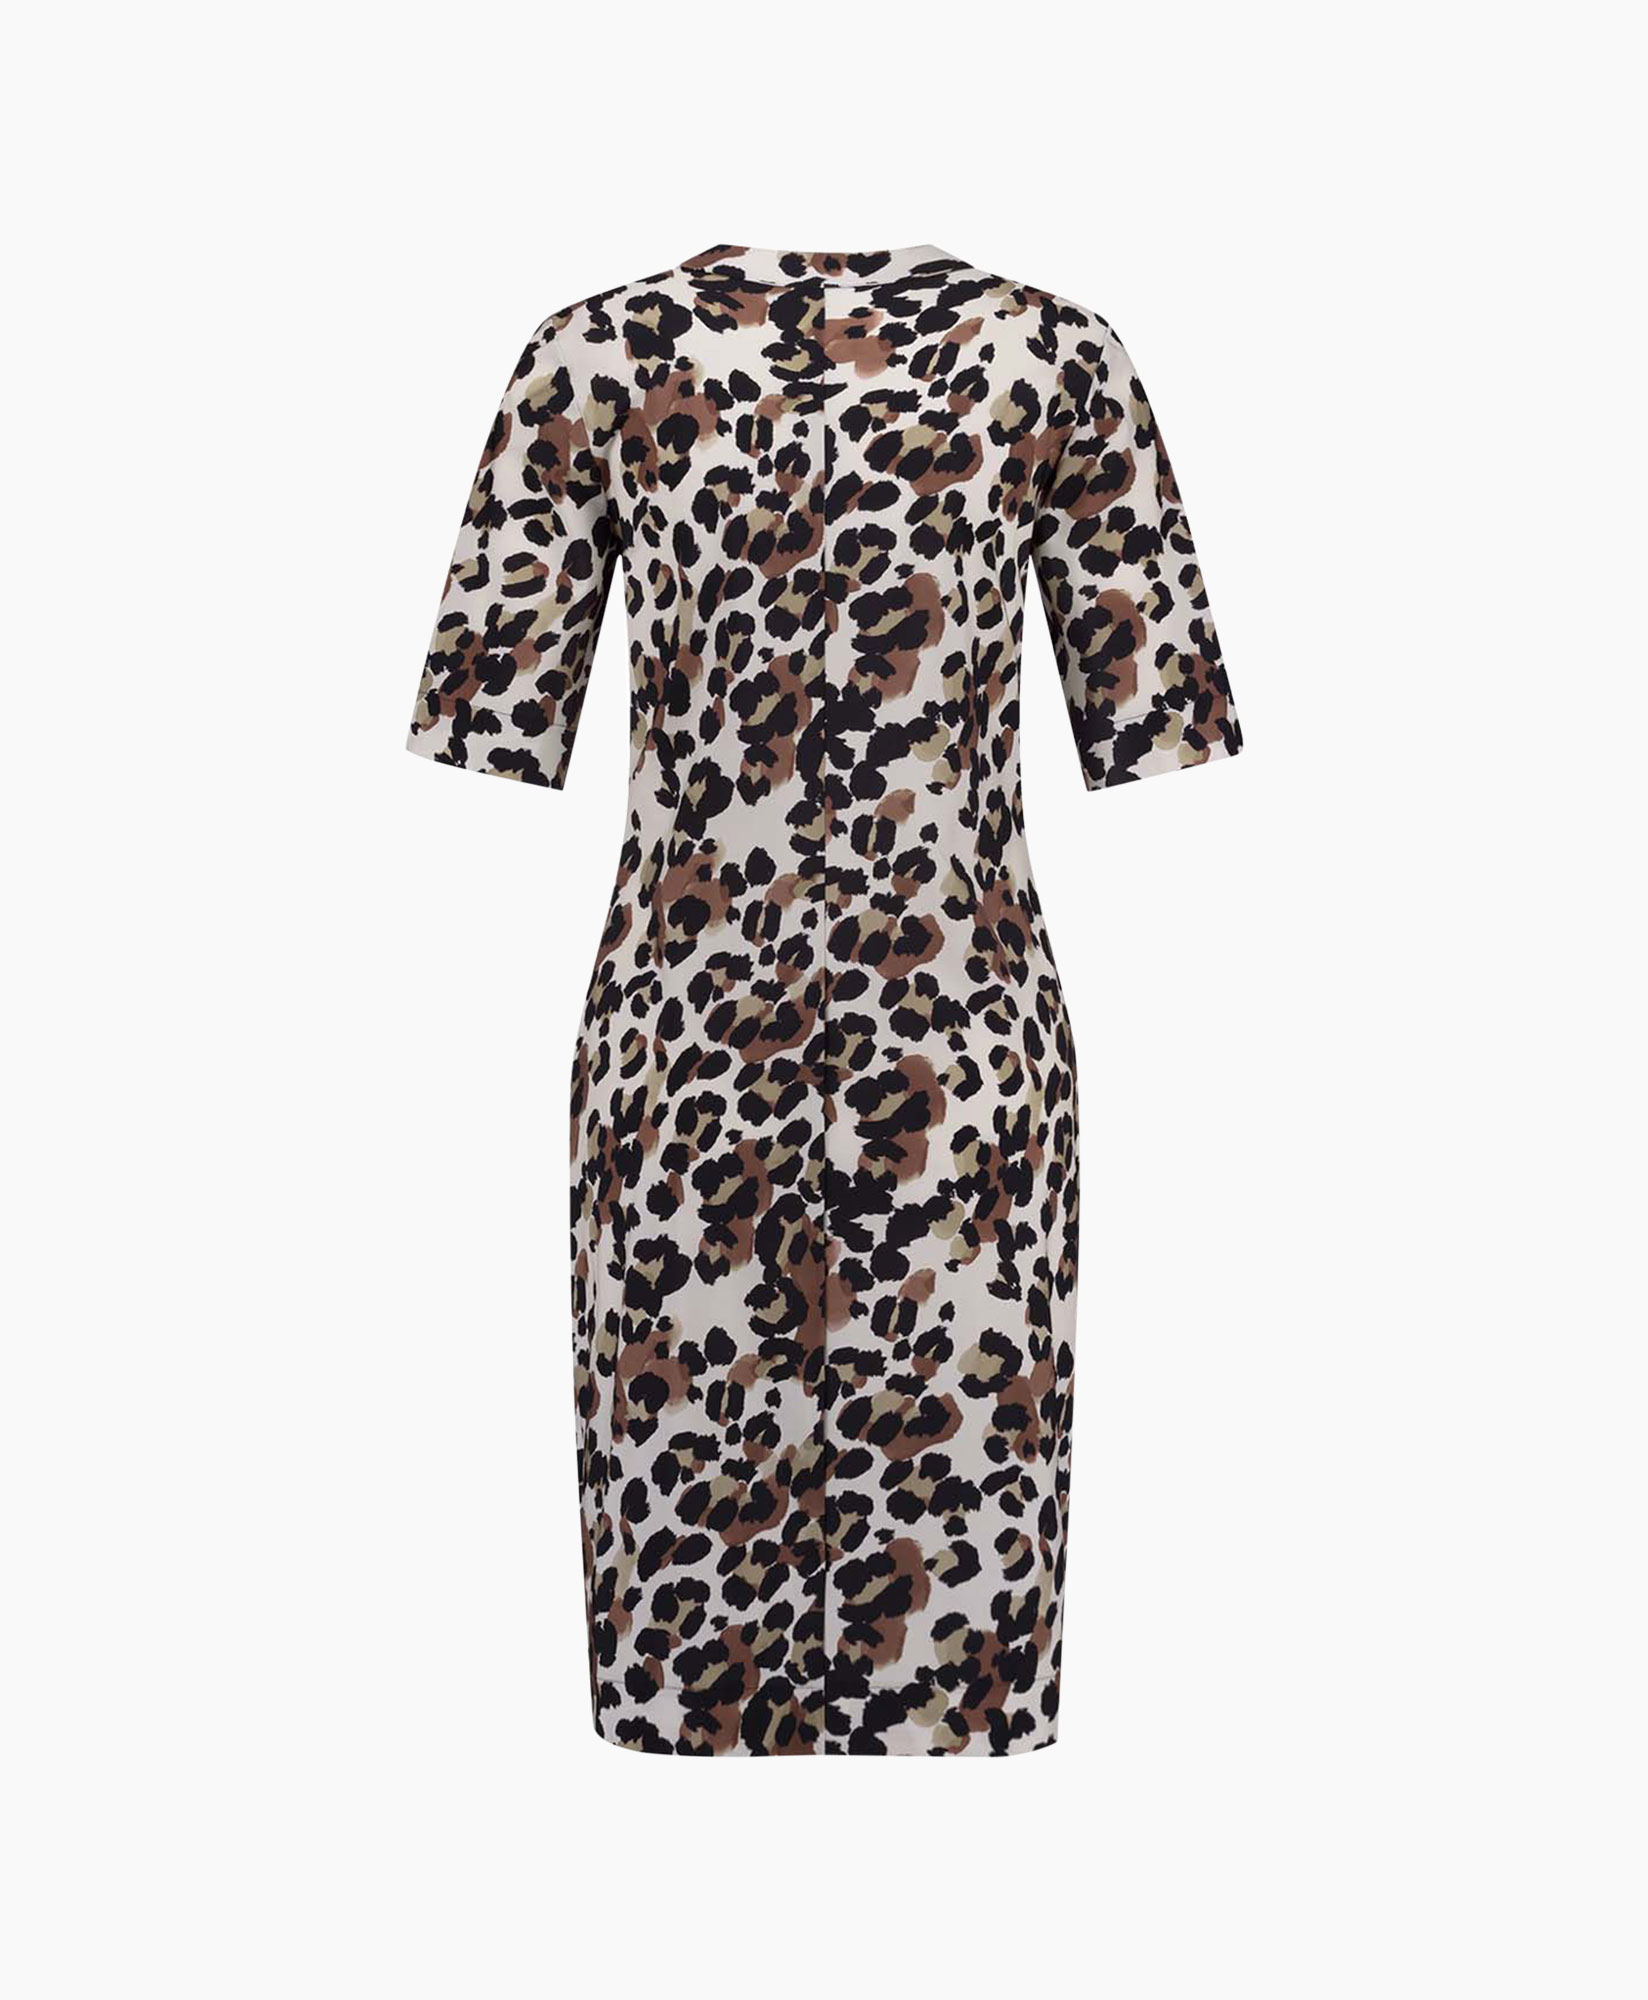 Jurk Simplicity Leopard Dress kit